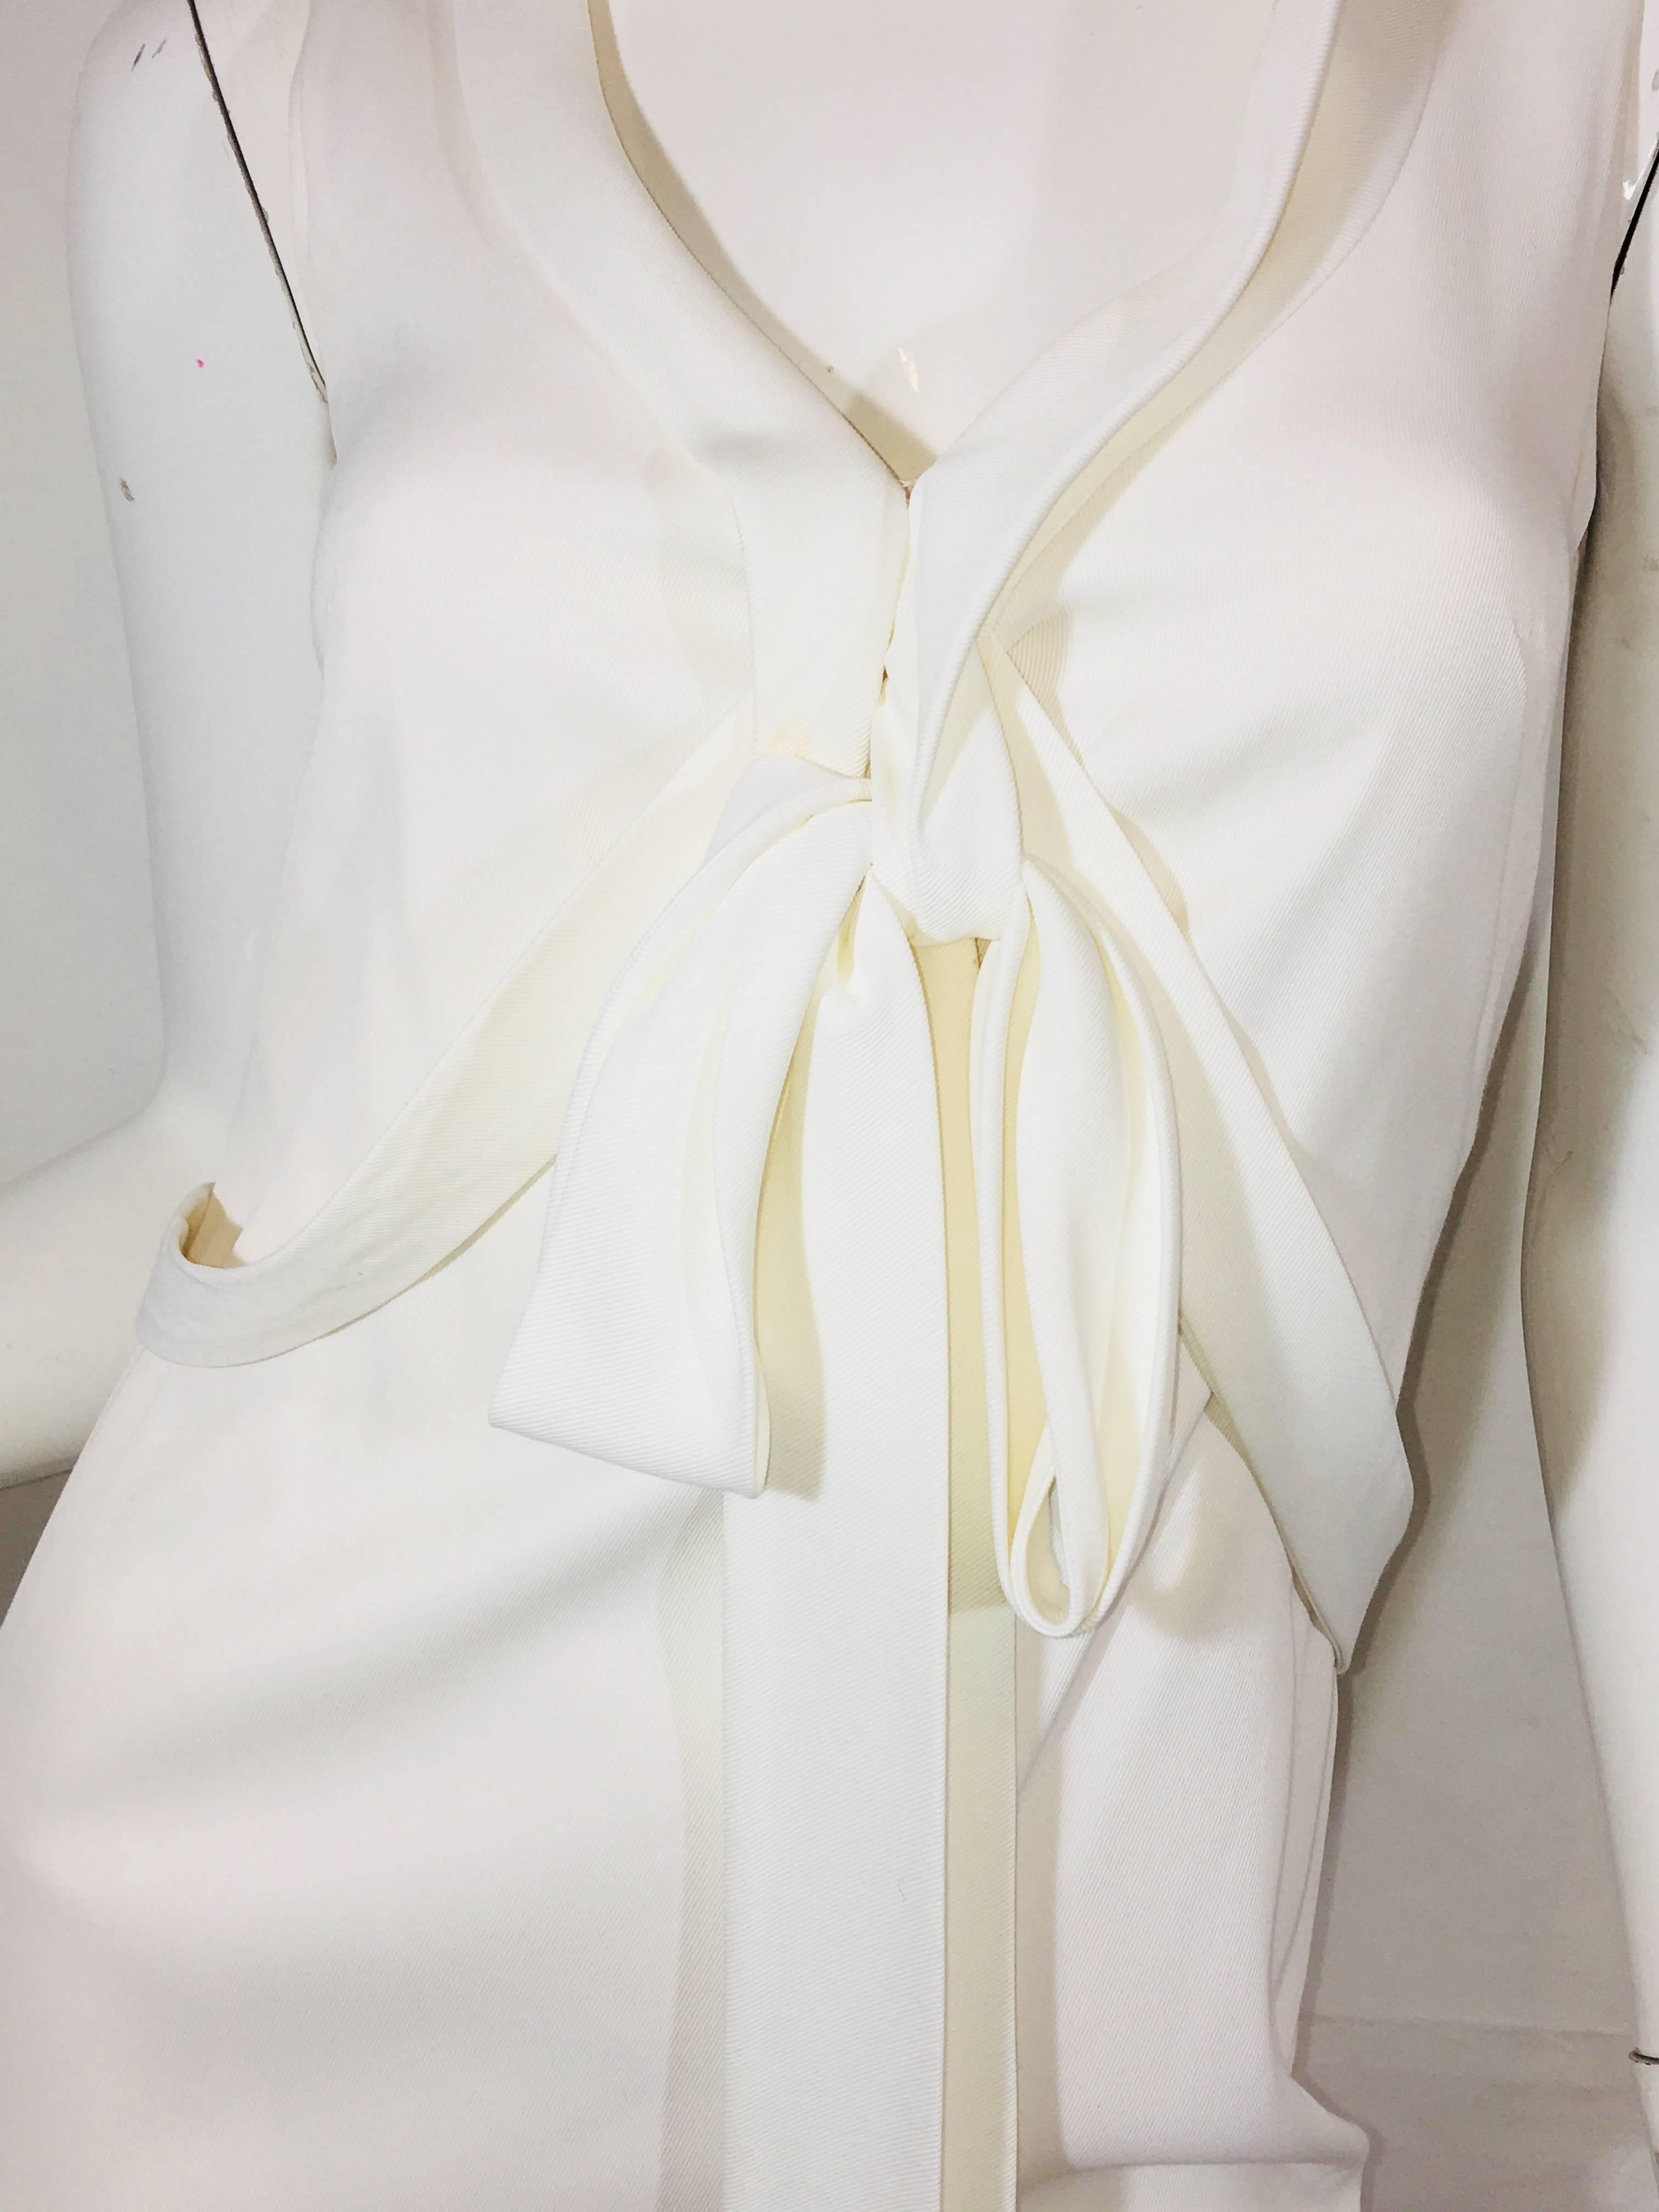 Zac Posen Ivory Silk Sleeveless Dress with Tie around Neck.. Some stains noted in photos.